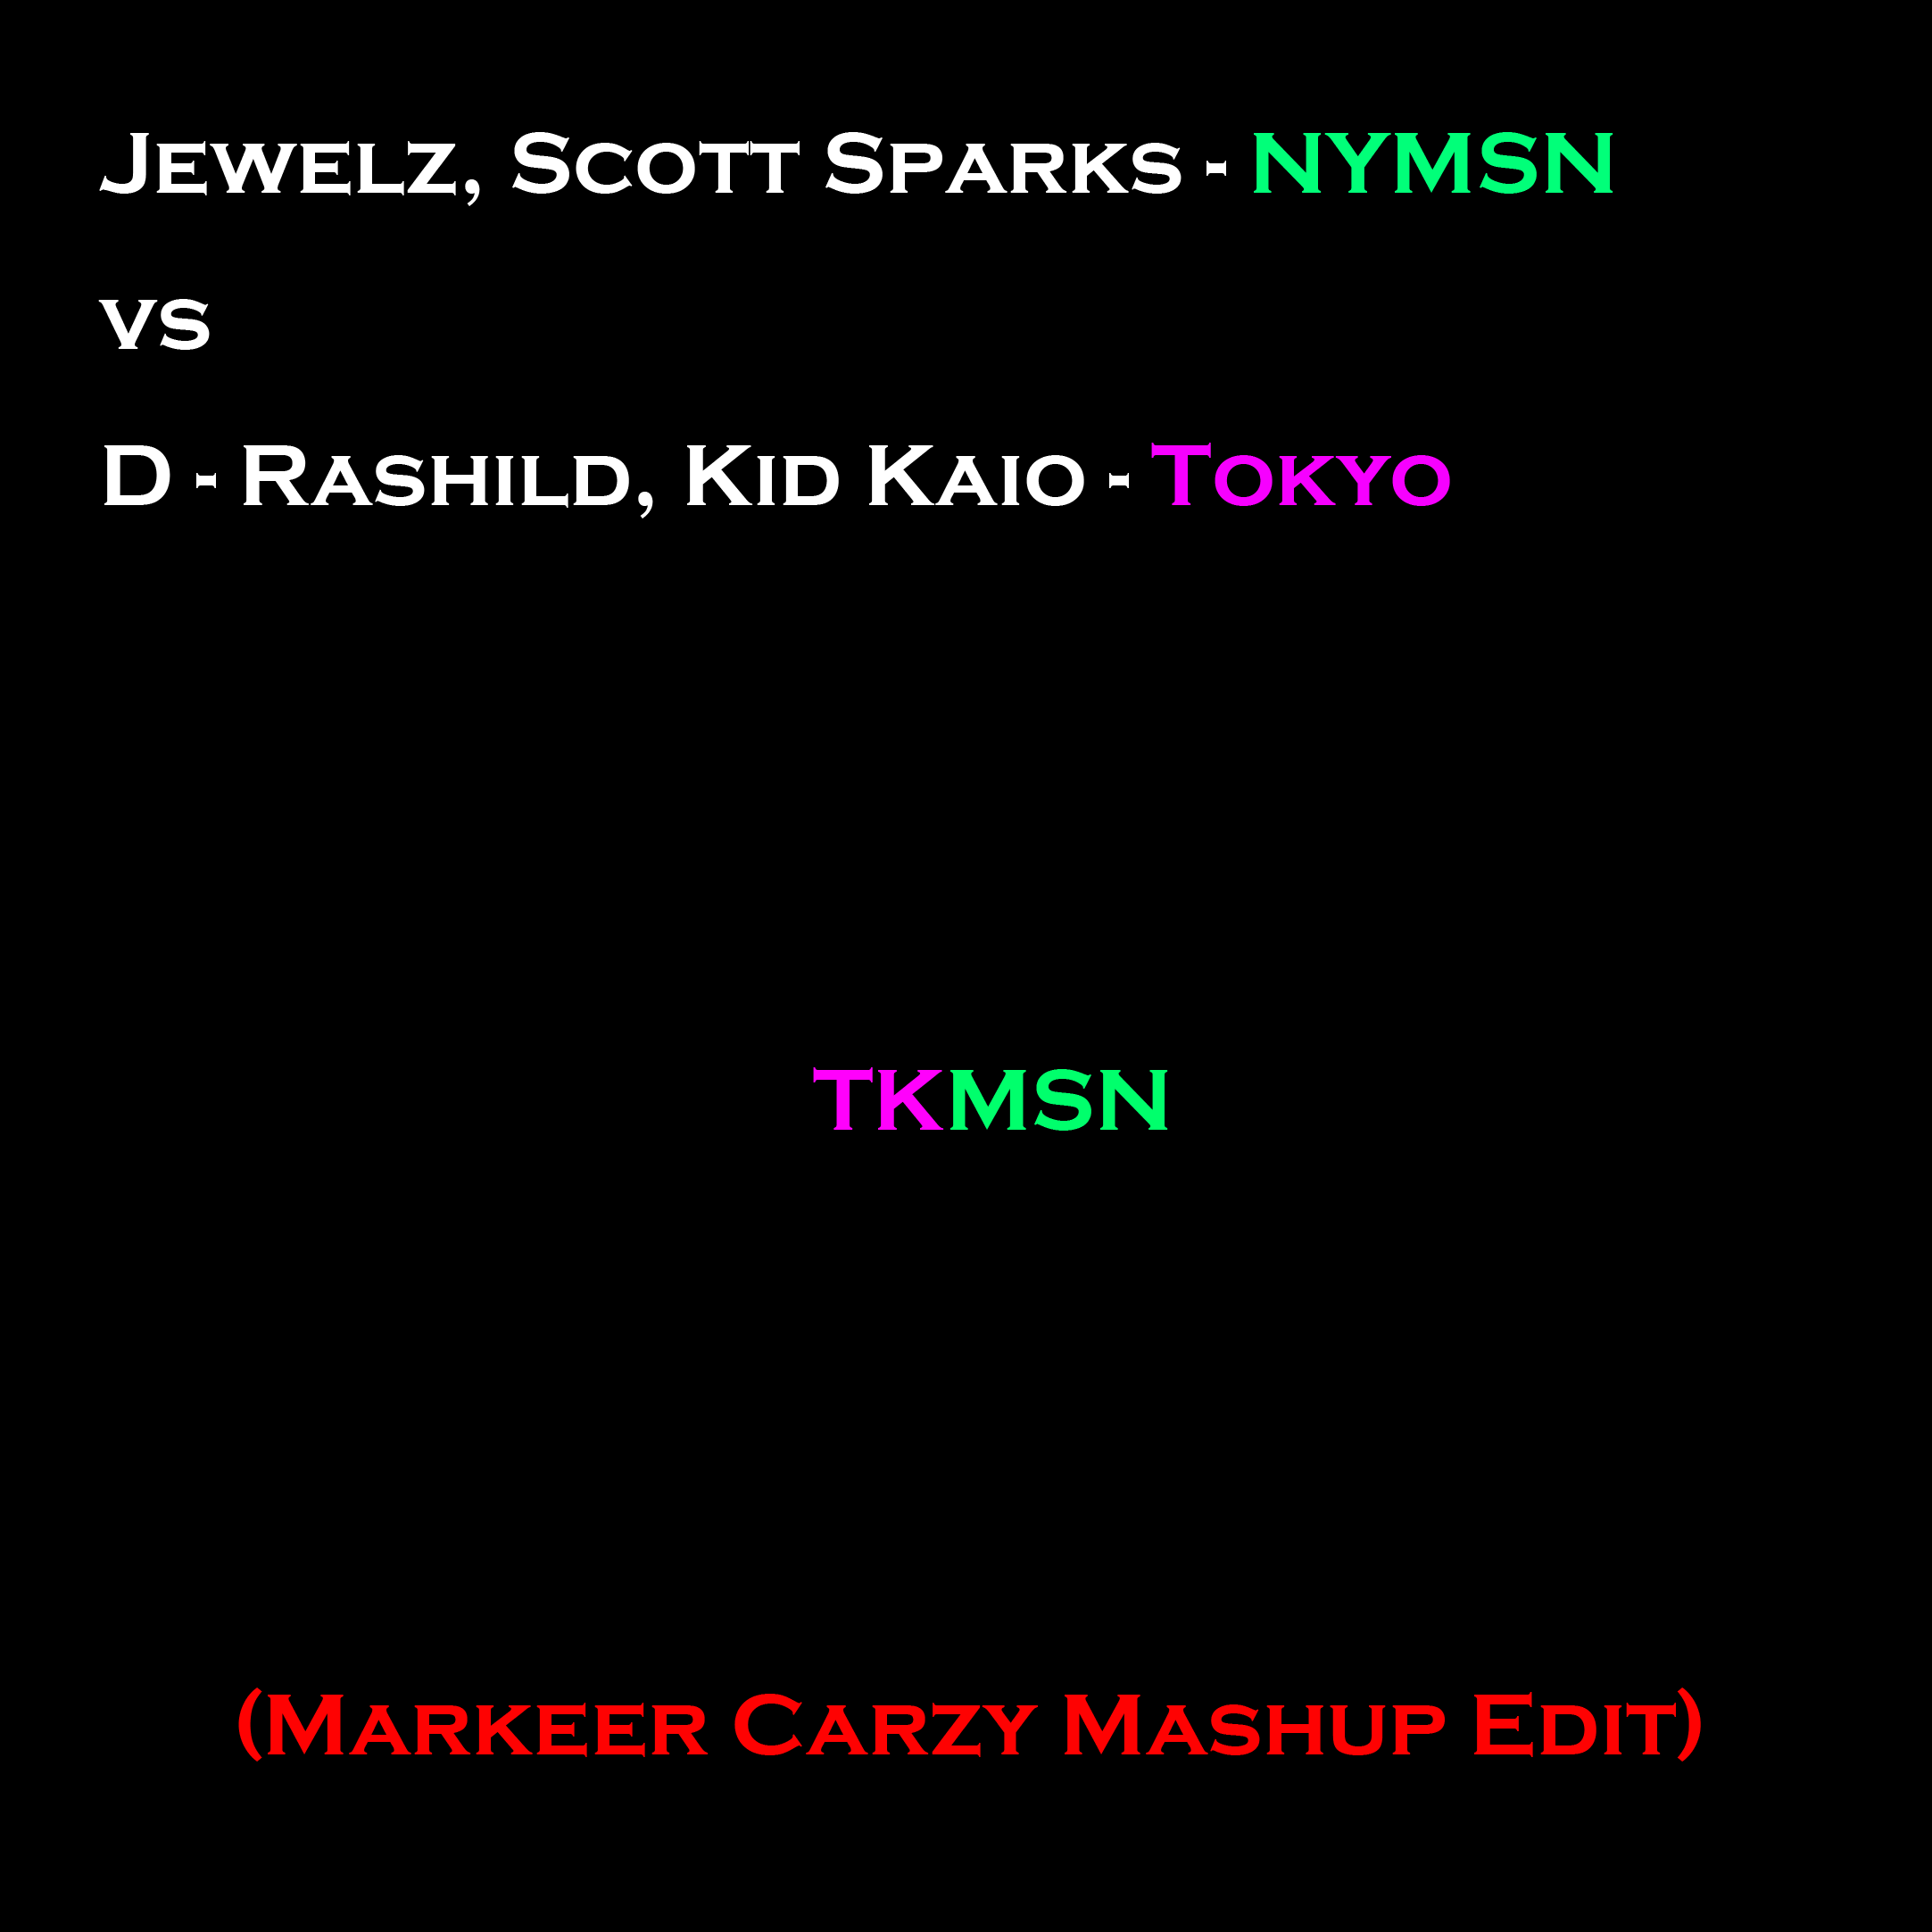 TKMSN.png : ◆자작/강추◆◆◆◆◆Jewelz, Scott sparks vs D-Rashild, Kid Kaio - TKMSN (Markeer Crazy Mashup Edit)